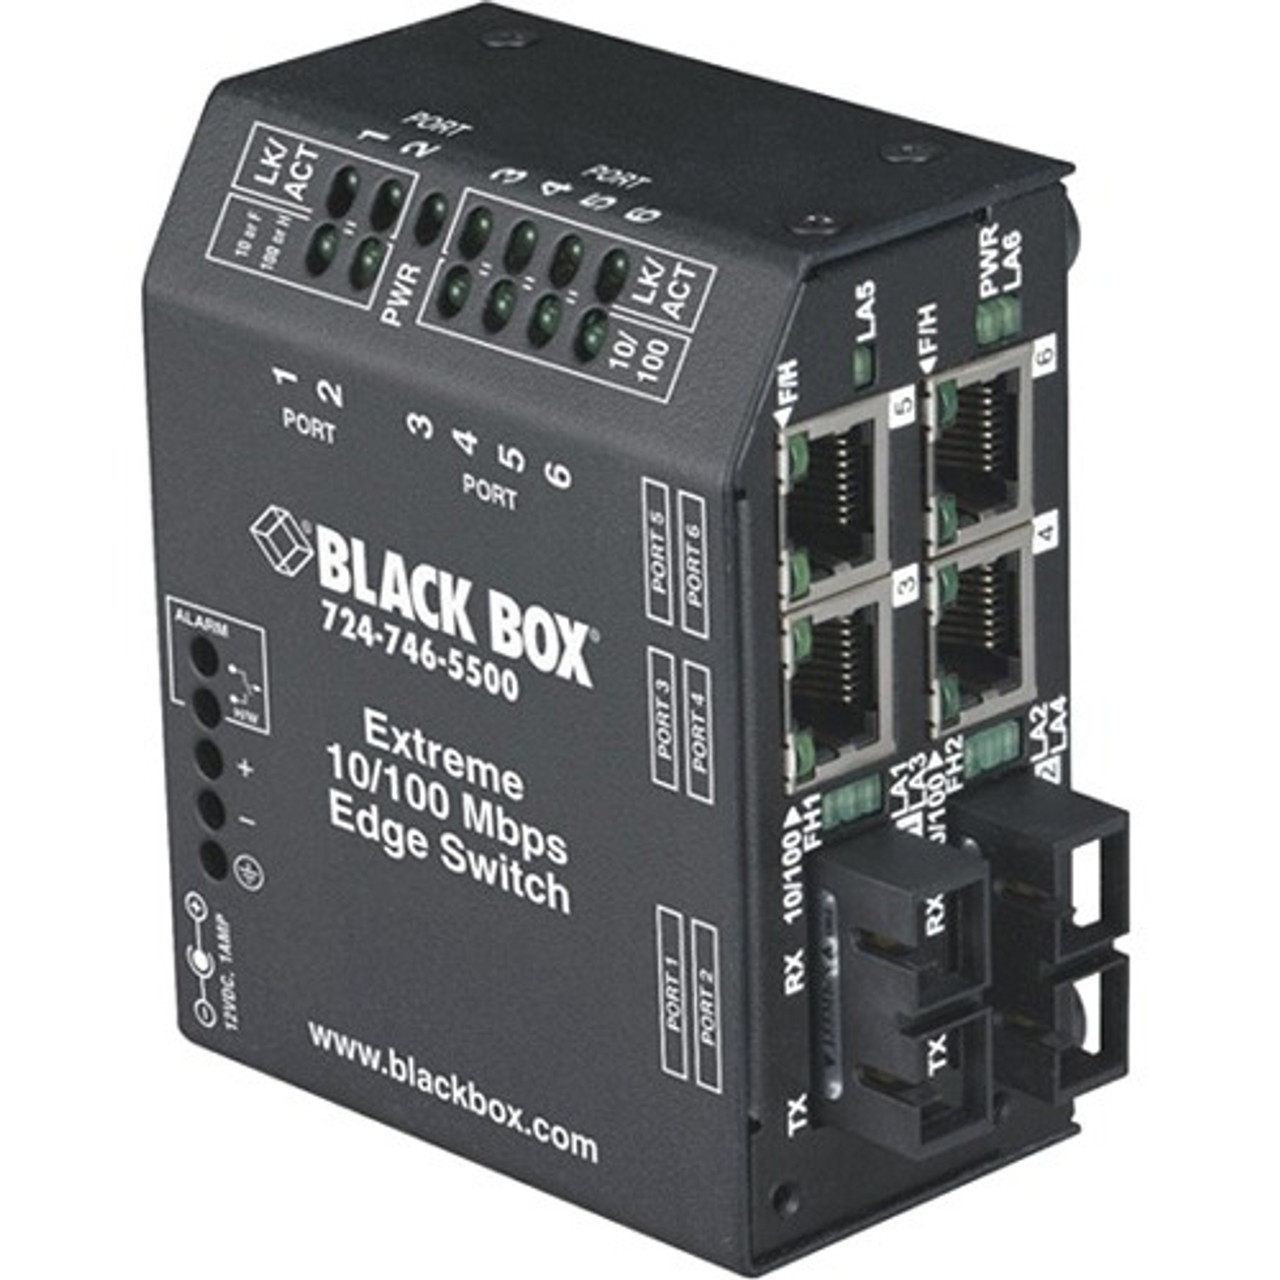 LBH240A-P-ST Black Box NIB-Heavy-Duty Edge Switches Extreme (4) Copper + (2) Fiber Po (Refurbished)